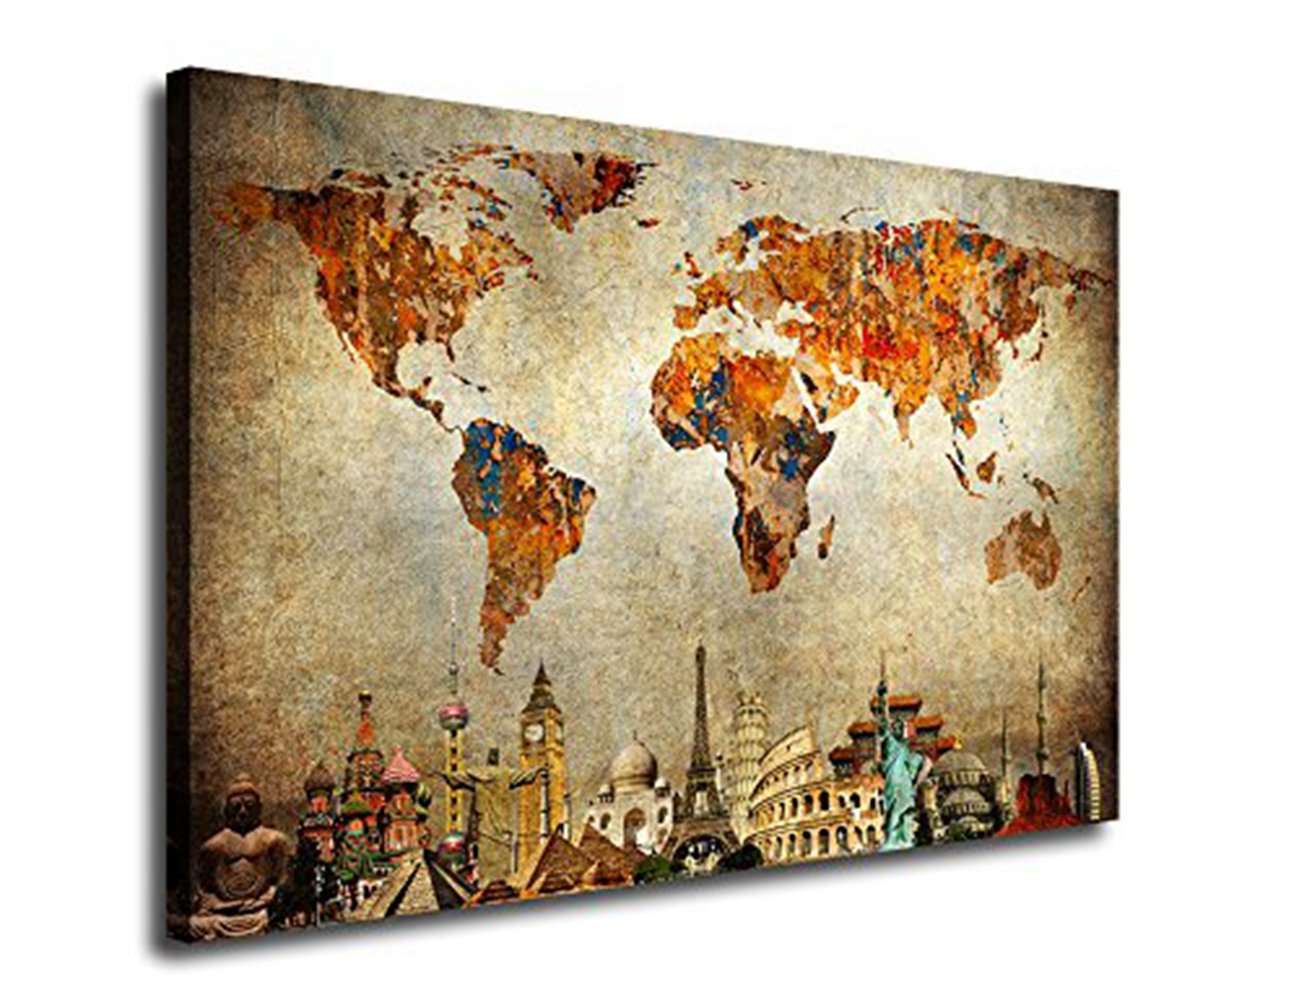 Multiple Panel Wall Decor Antique World Map Wall Art